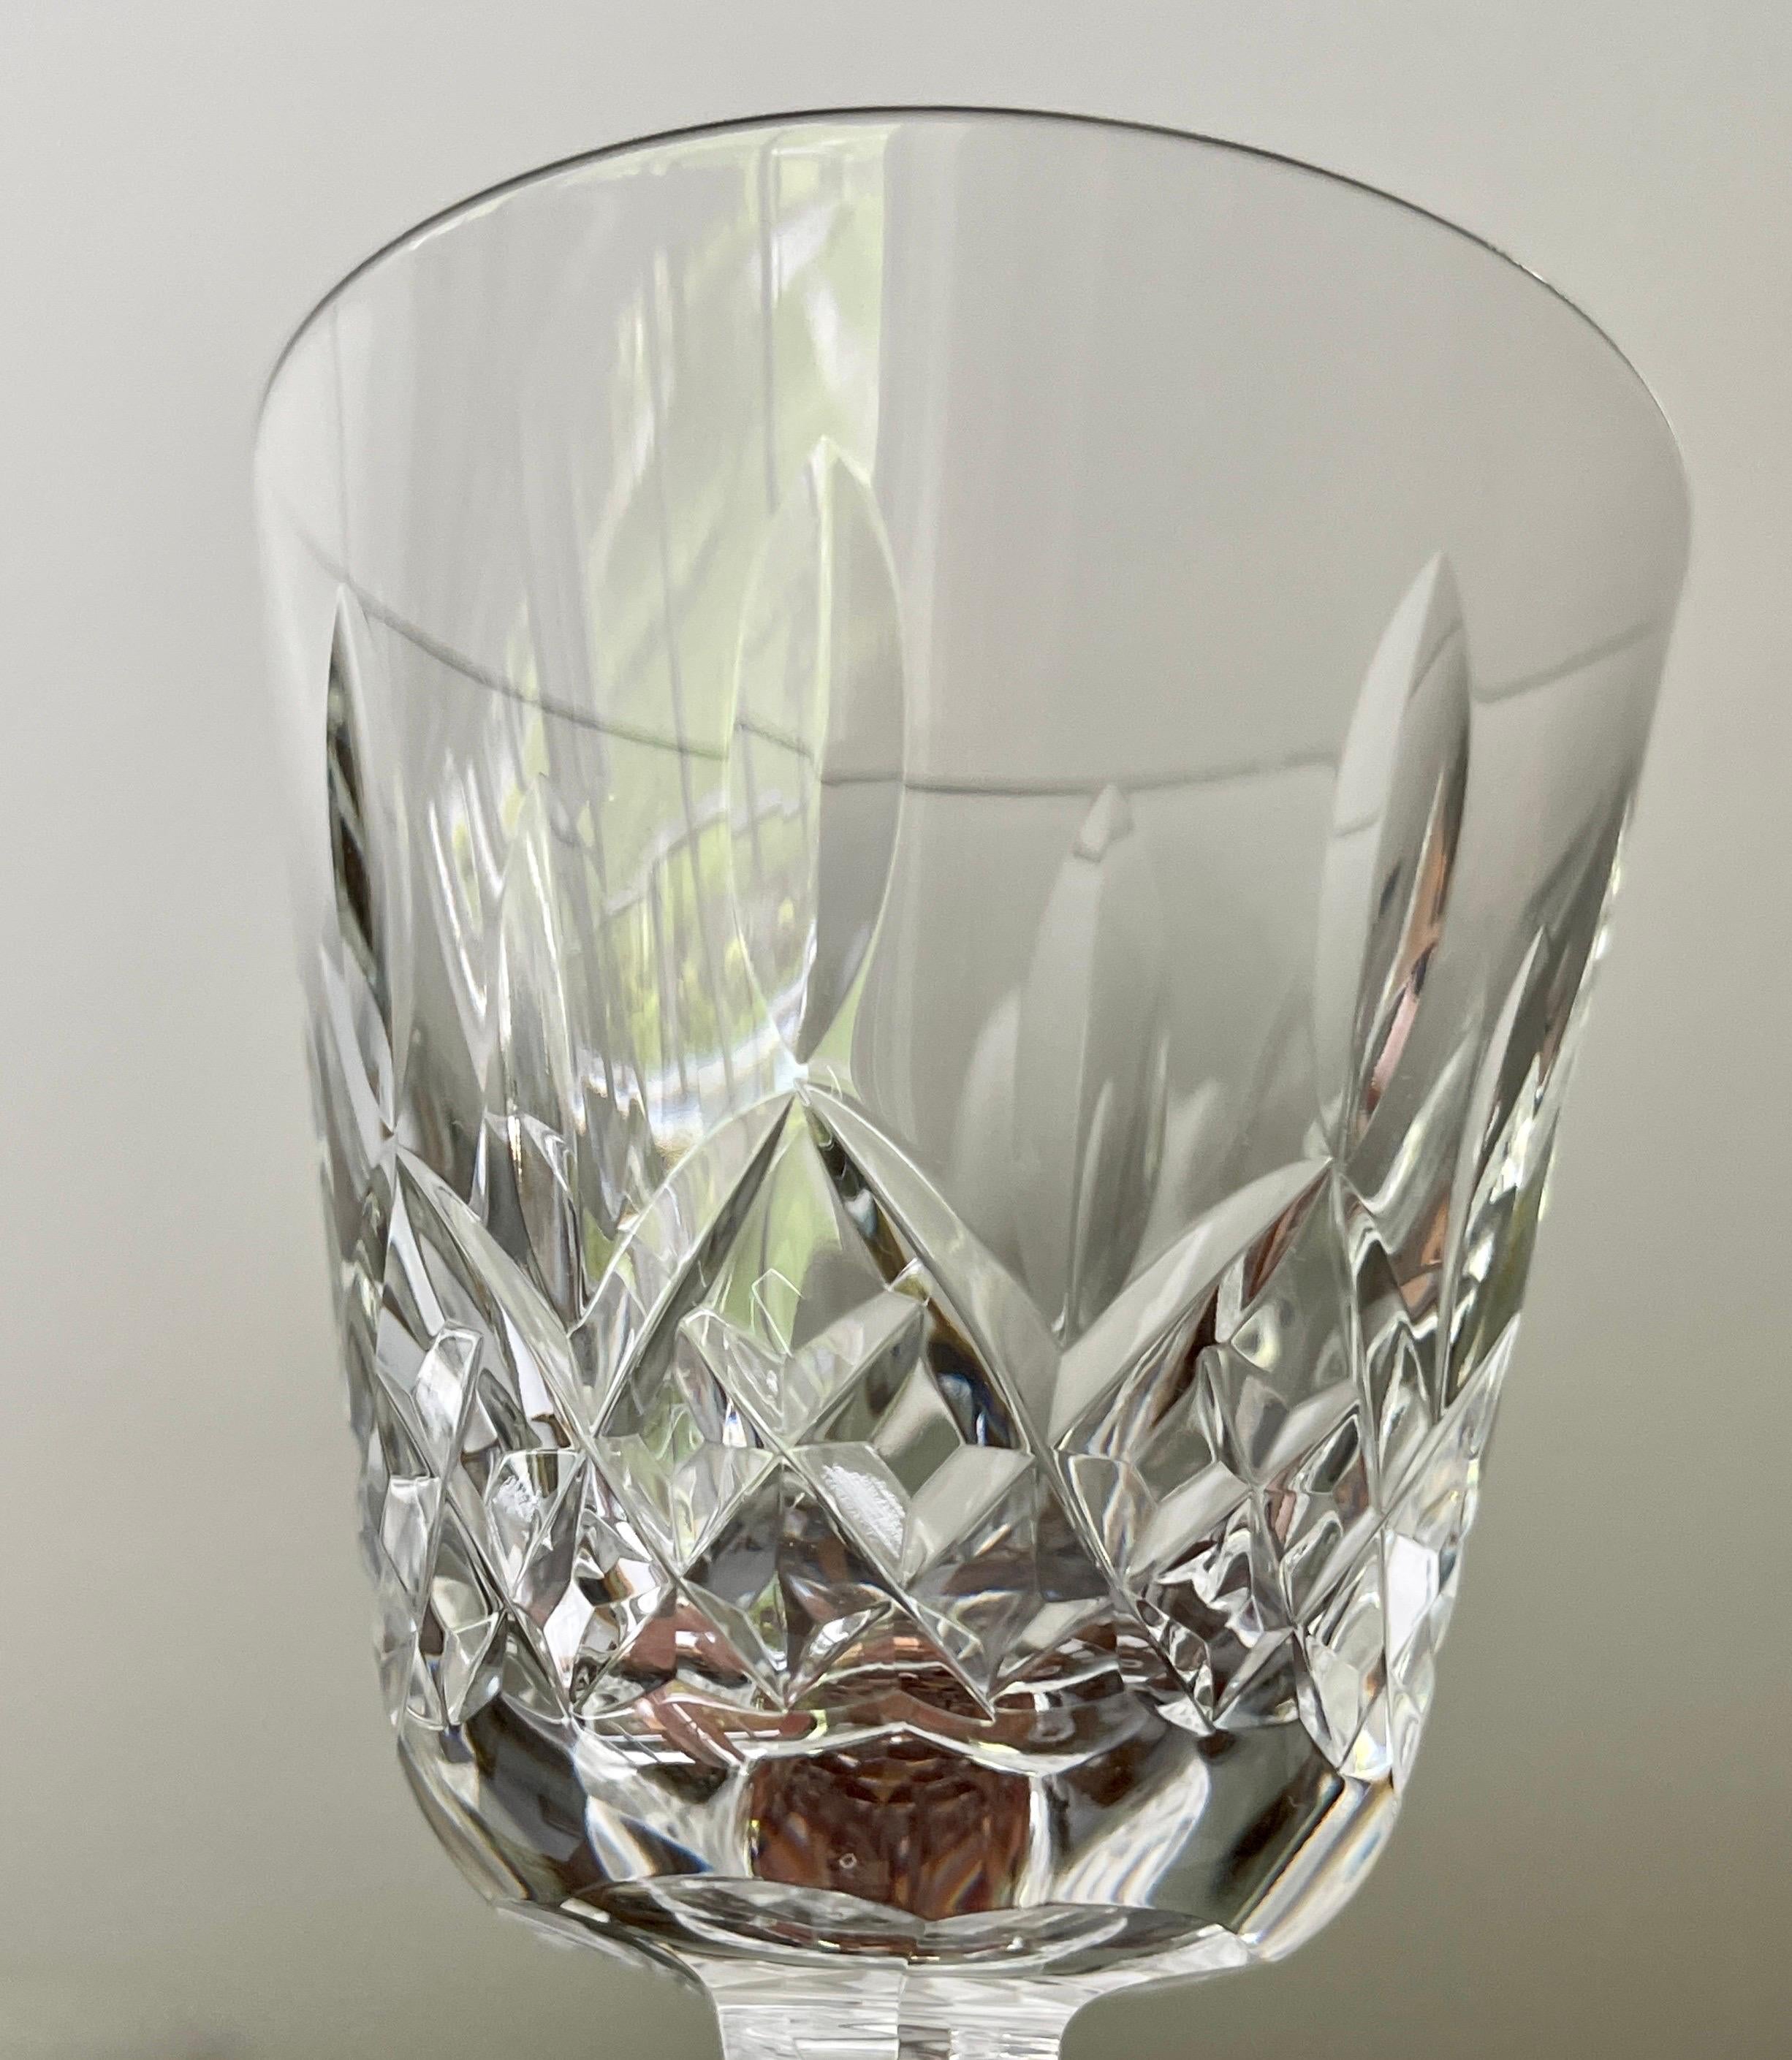 Set of 14 Vintage Lismore Waterford Crystal Wine Glasses, circa 1990s 1